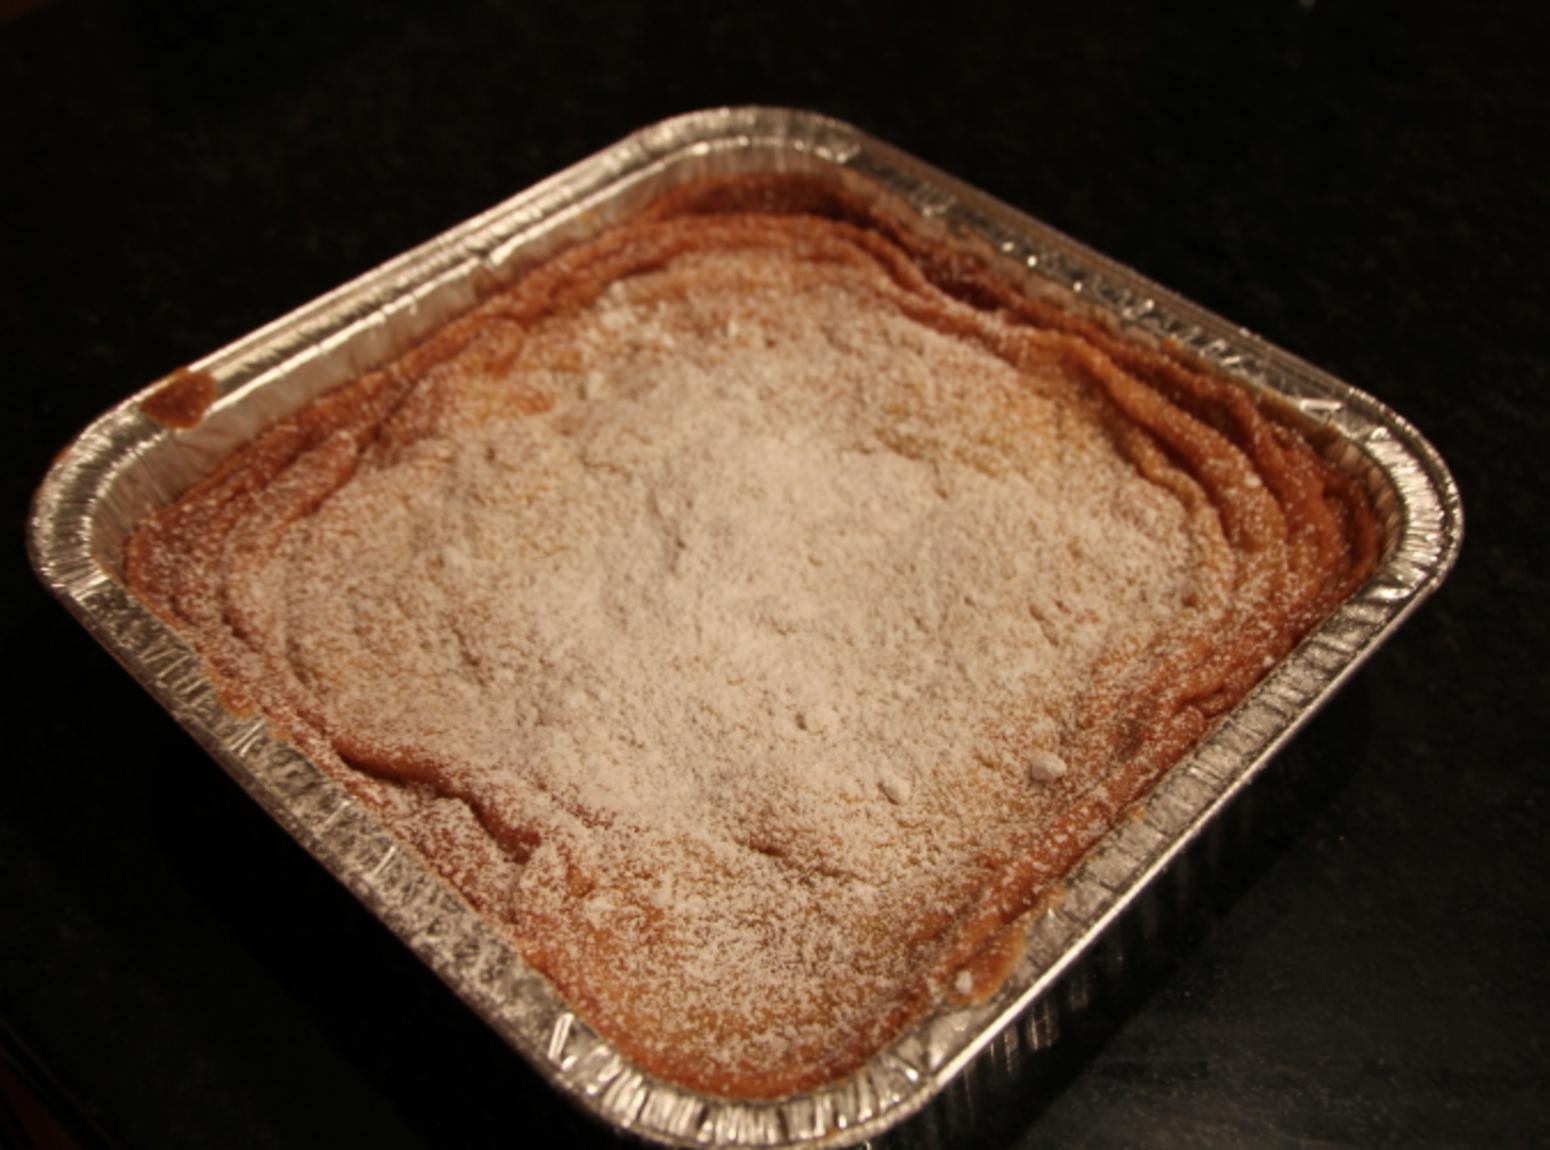 St Louis Gooey Butter Cake Recipe | Just A Pinch Recipes